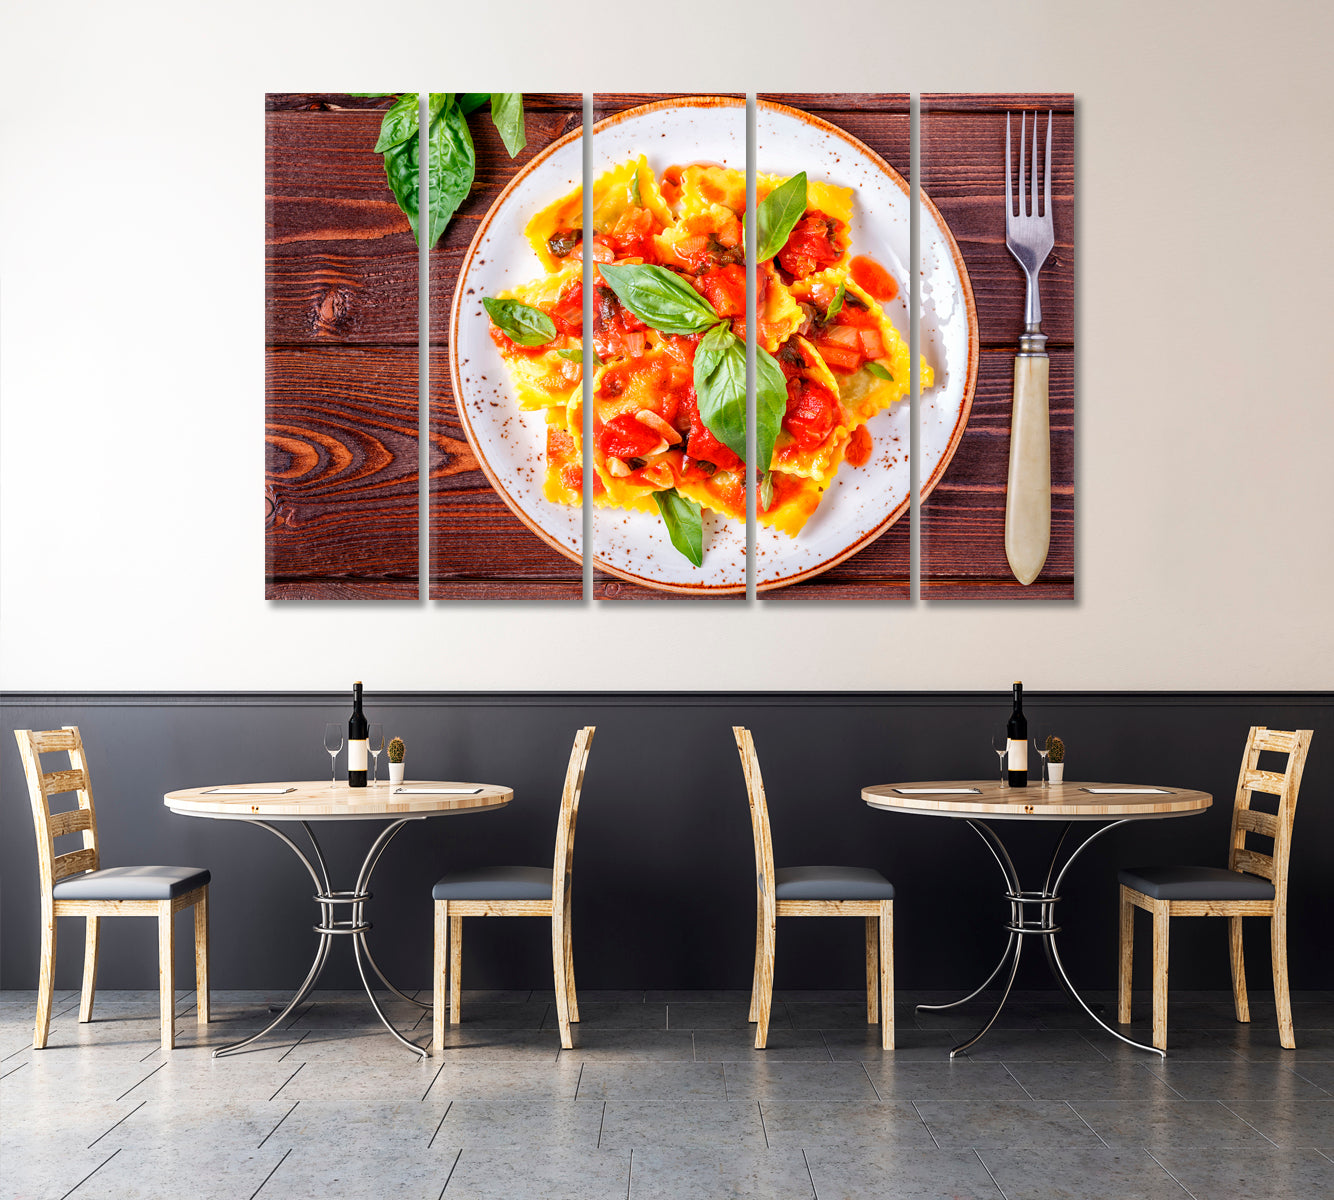 Ravioli with Tomato Sauce and Basil Canvas Print-Canvas Print-CetArt-1 Panel-24x16 inches-CetArt